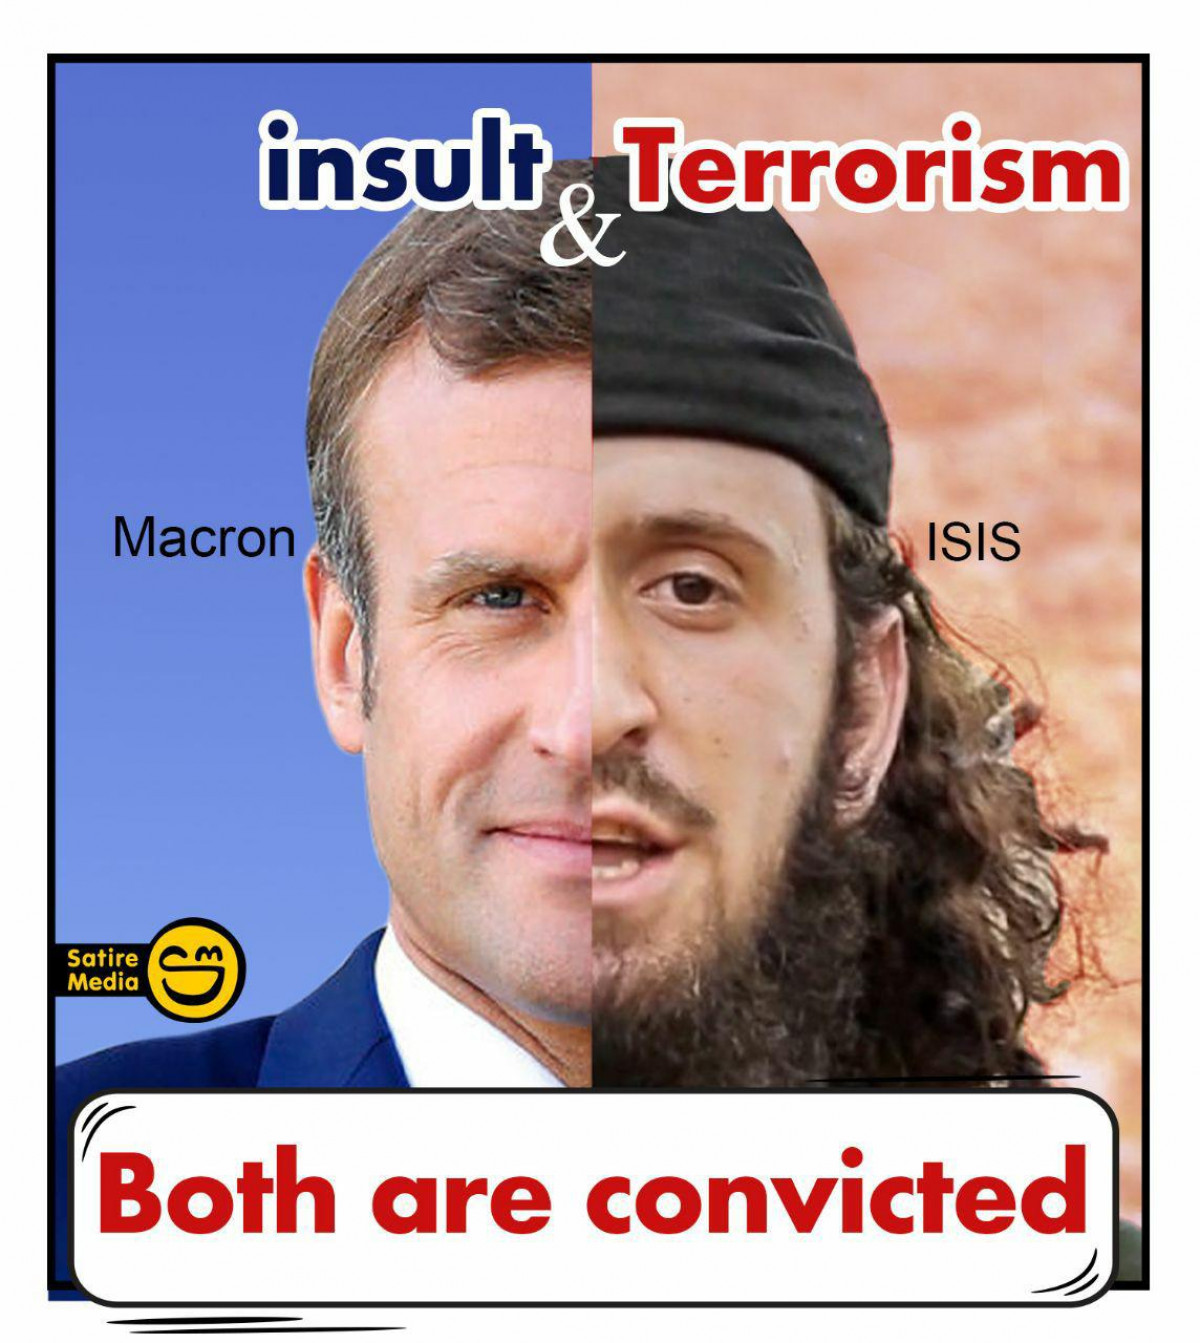 insult & Terrorism